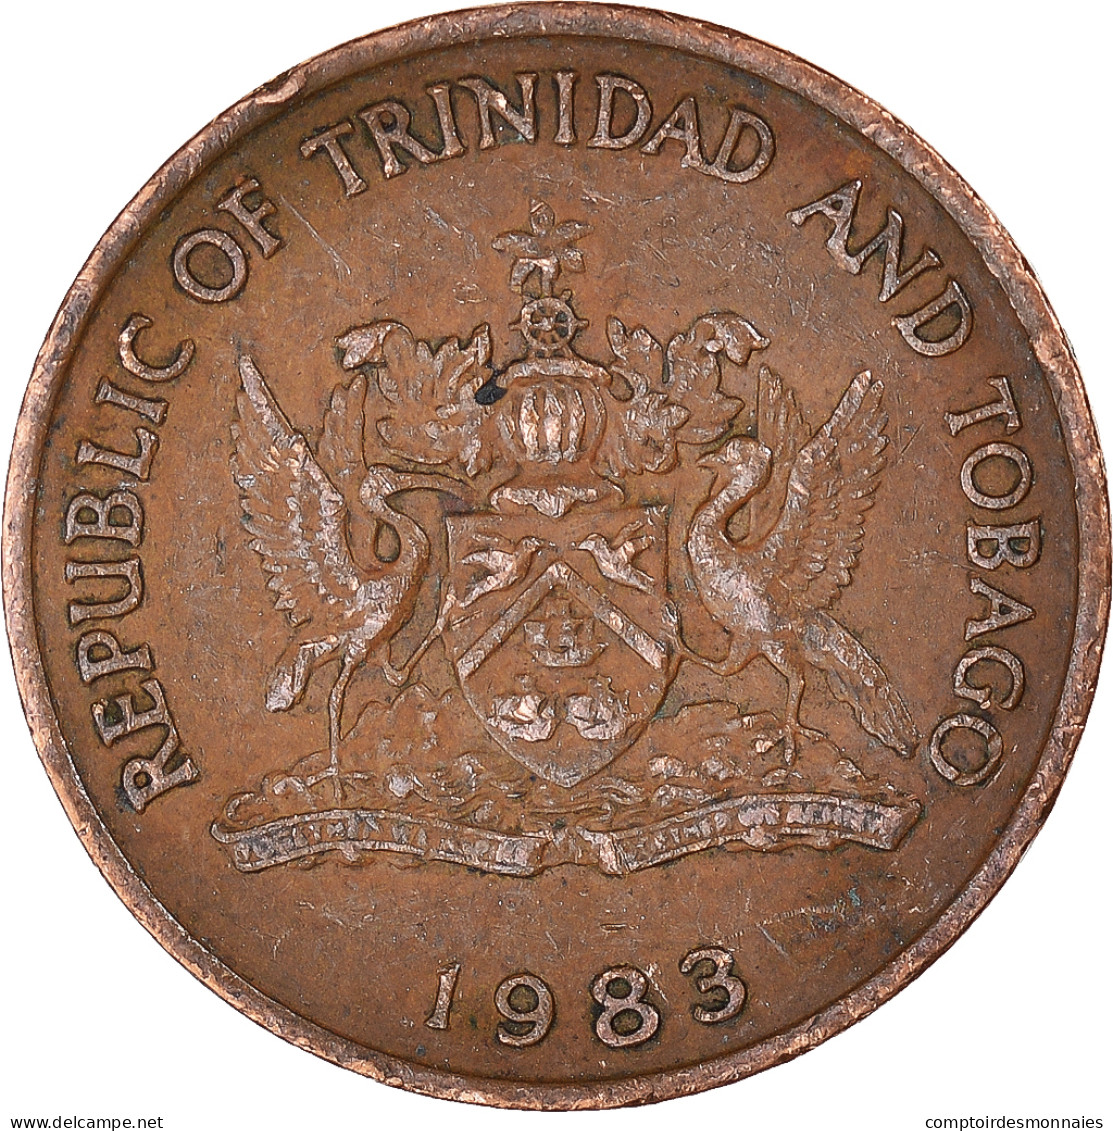 Monnaie, Trinité-et-Tobago, 5 Cents, 1983 - Trindad & Tobago